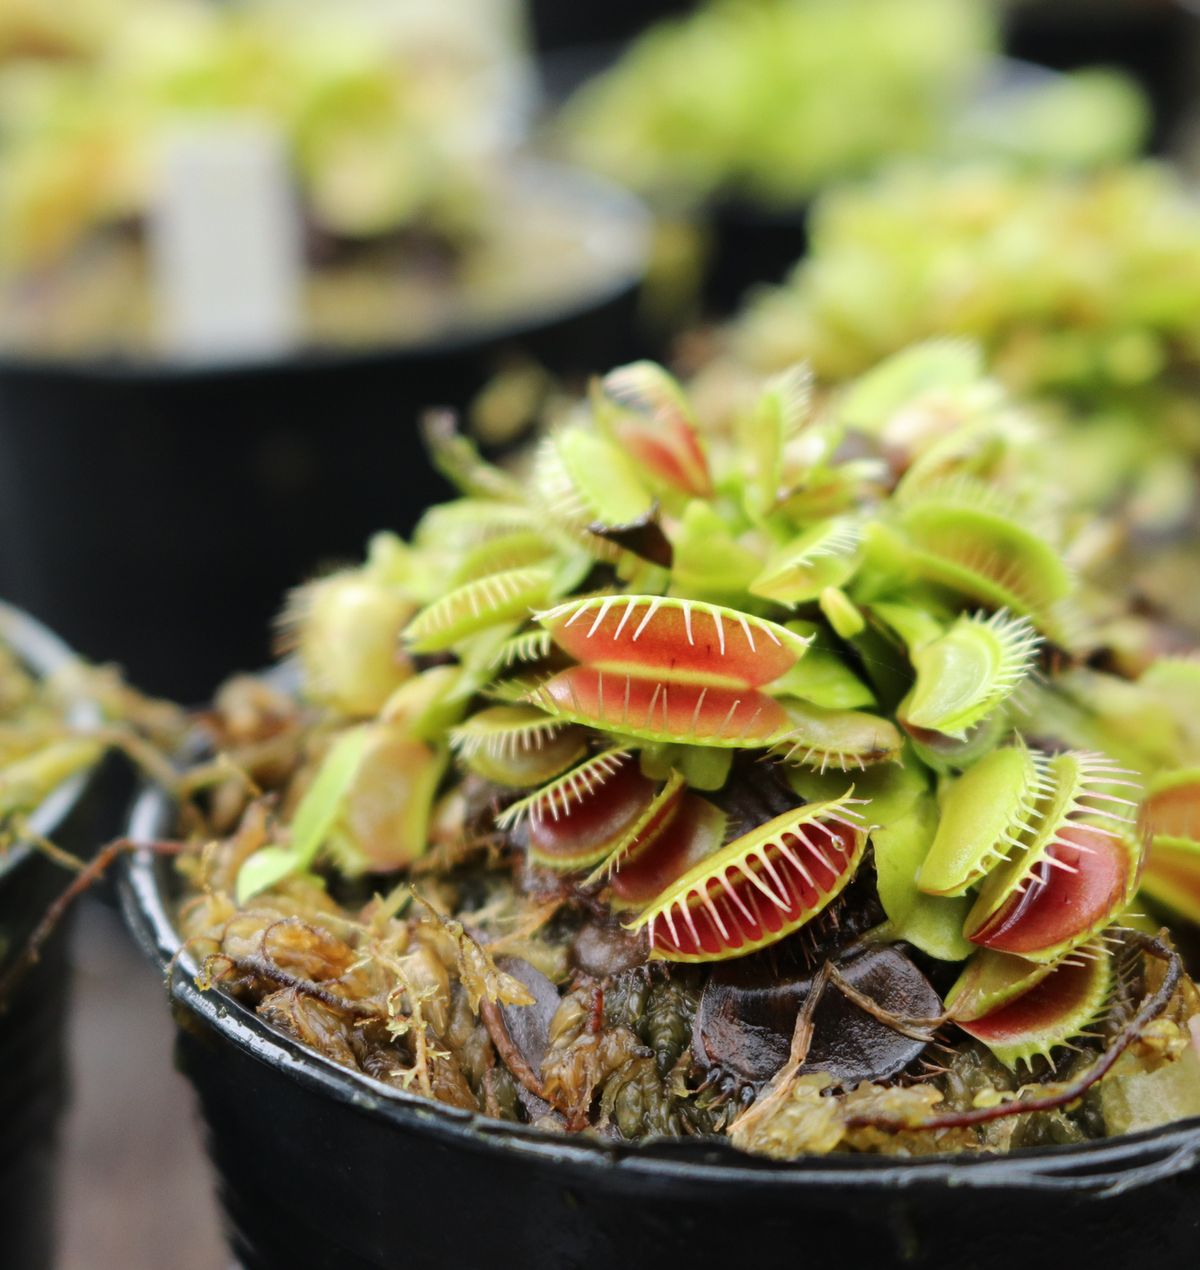 Venus Fly Trap Care 101: How to Grow This Carnivorous Houseplant - Bob Vila